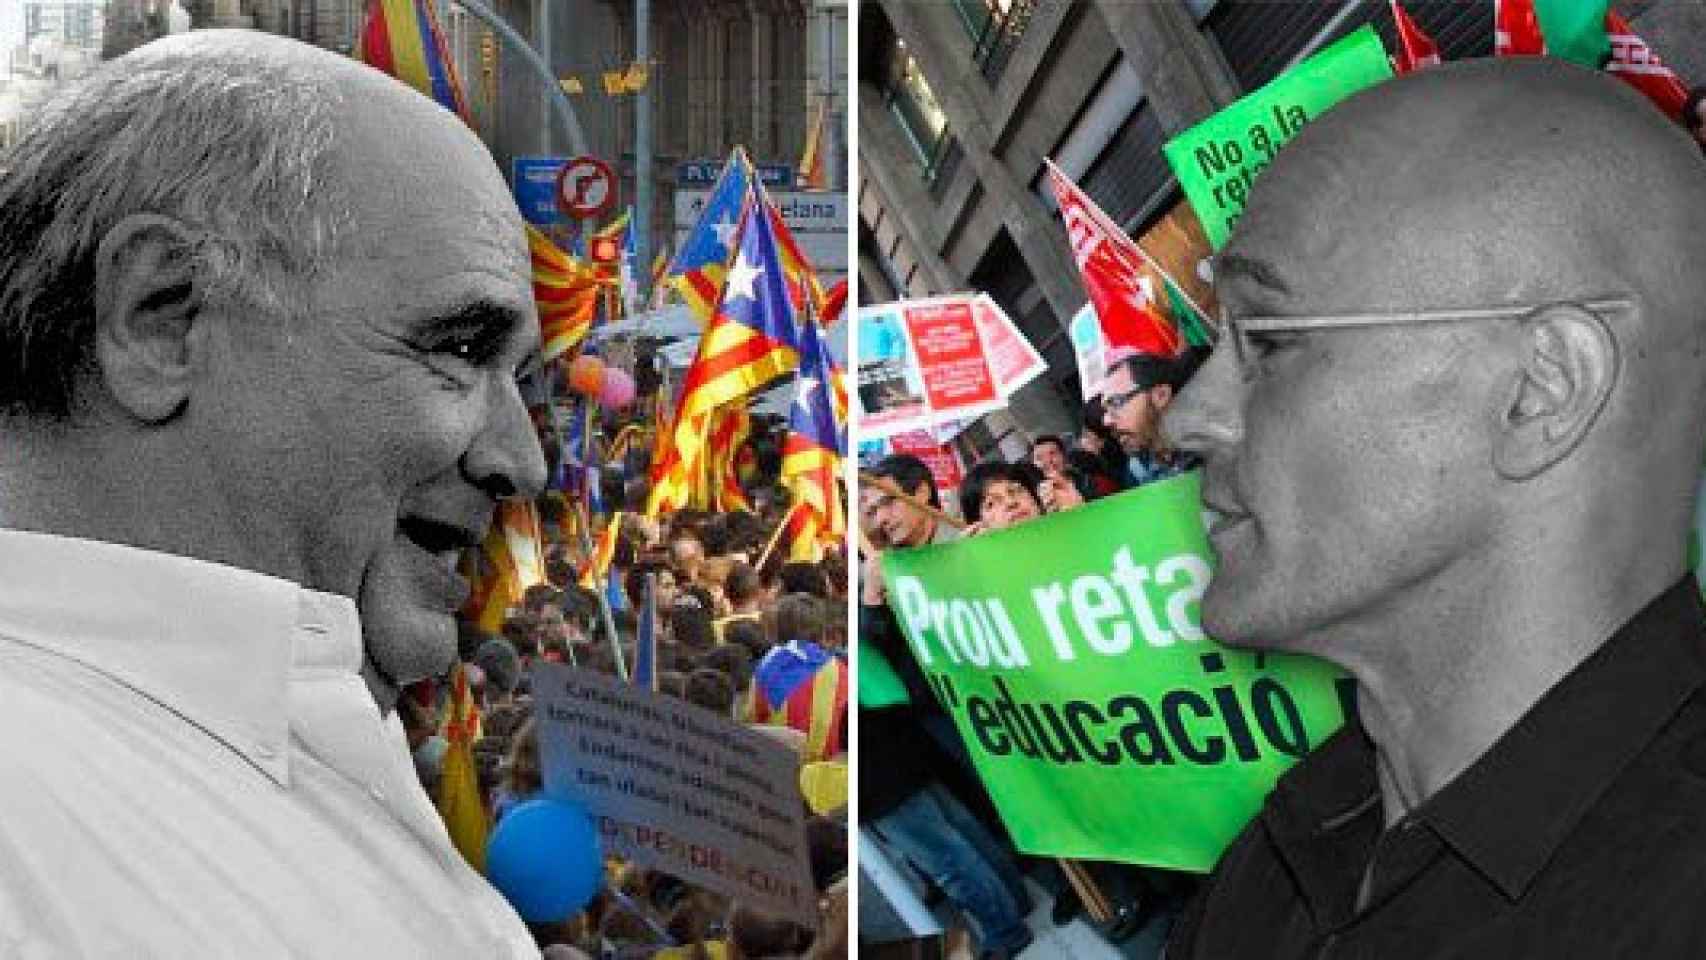 Los candidatos de Catalunya sí que es pot, Lluís Rabell, y de Junts pel sí, Raül Romeva, en un fotomontaje